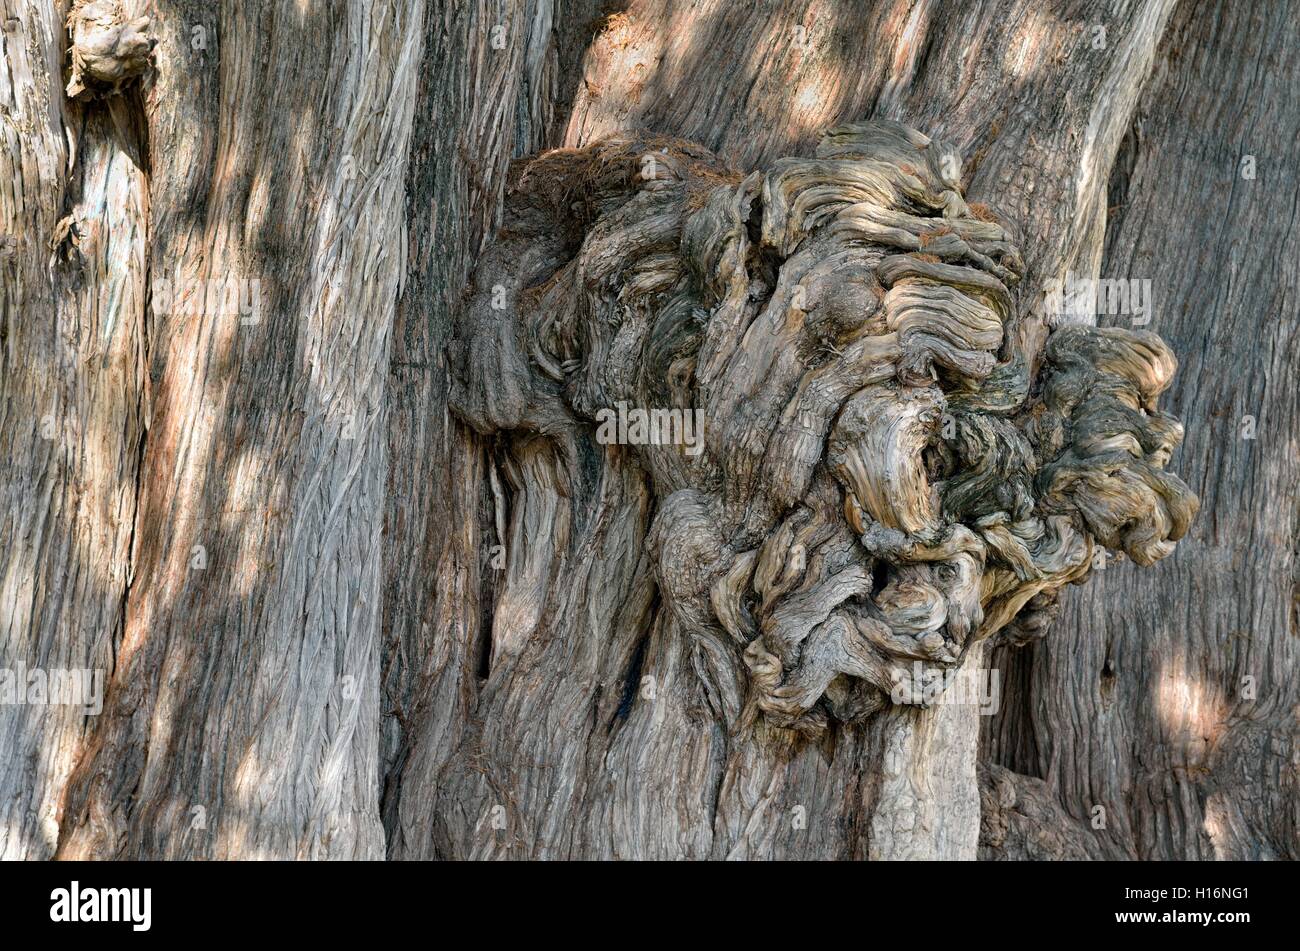 Arbol del Tule, cypress (Taxodium mucronatum), trunk, detail of growth, Santa Maria del Tule, Oaxaca, Mexico Stock Photo